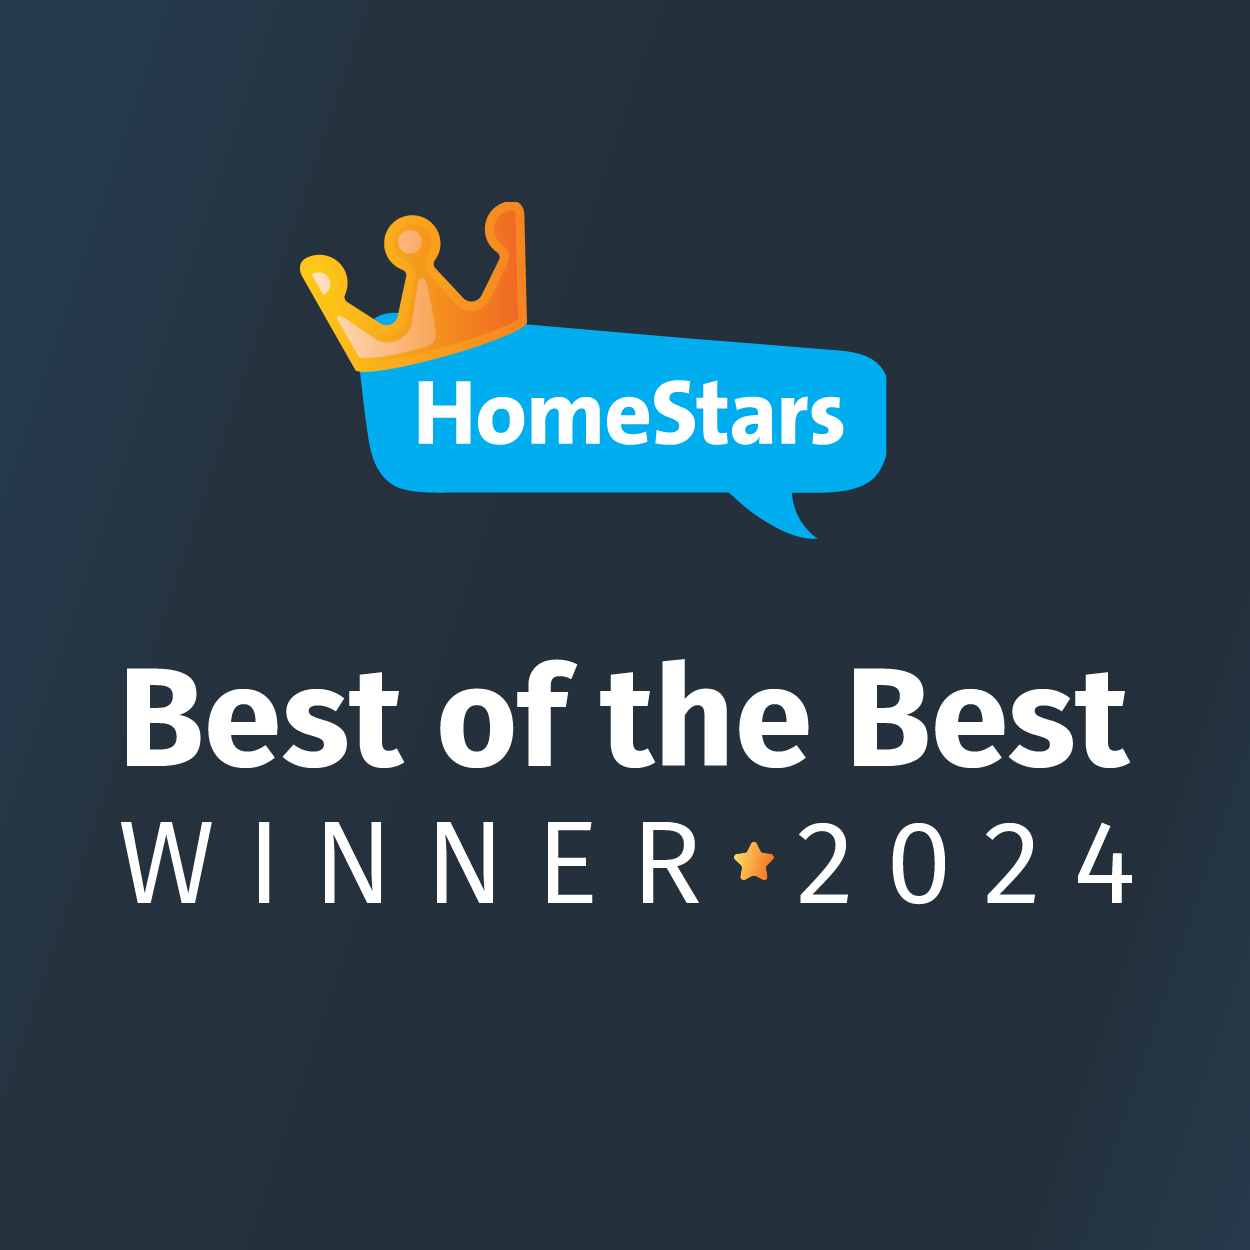 HomeStars Best of the Best Winners 2024